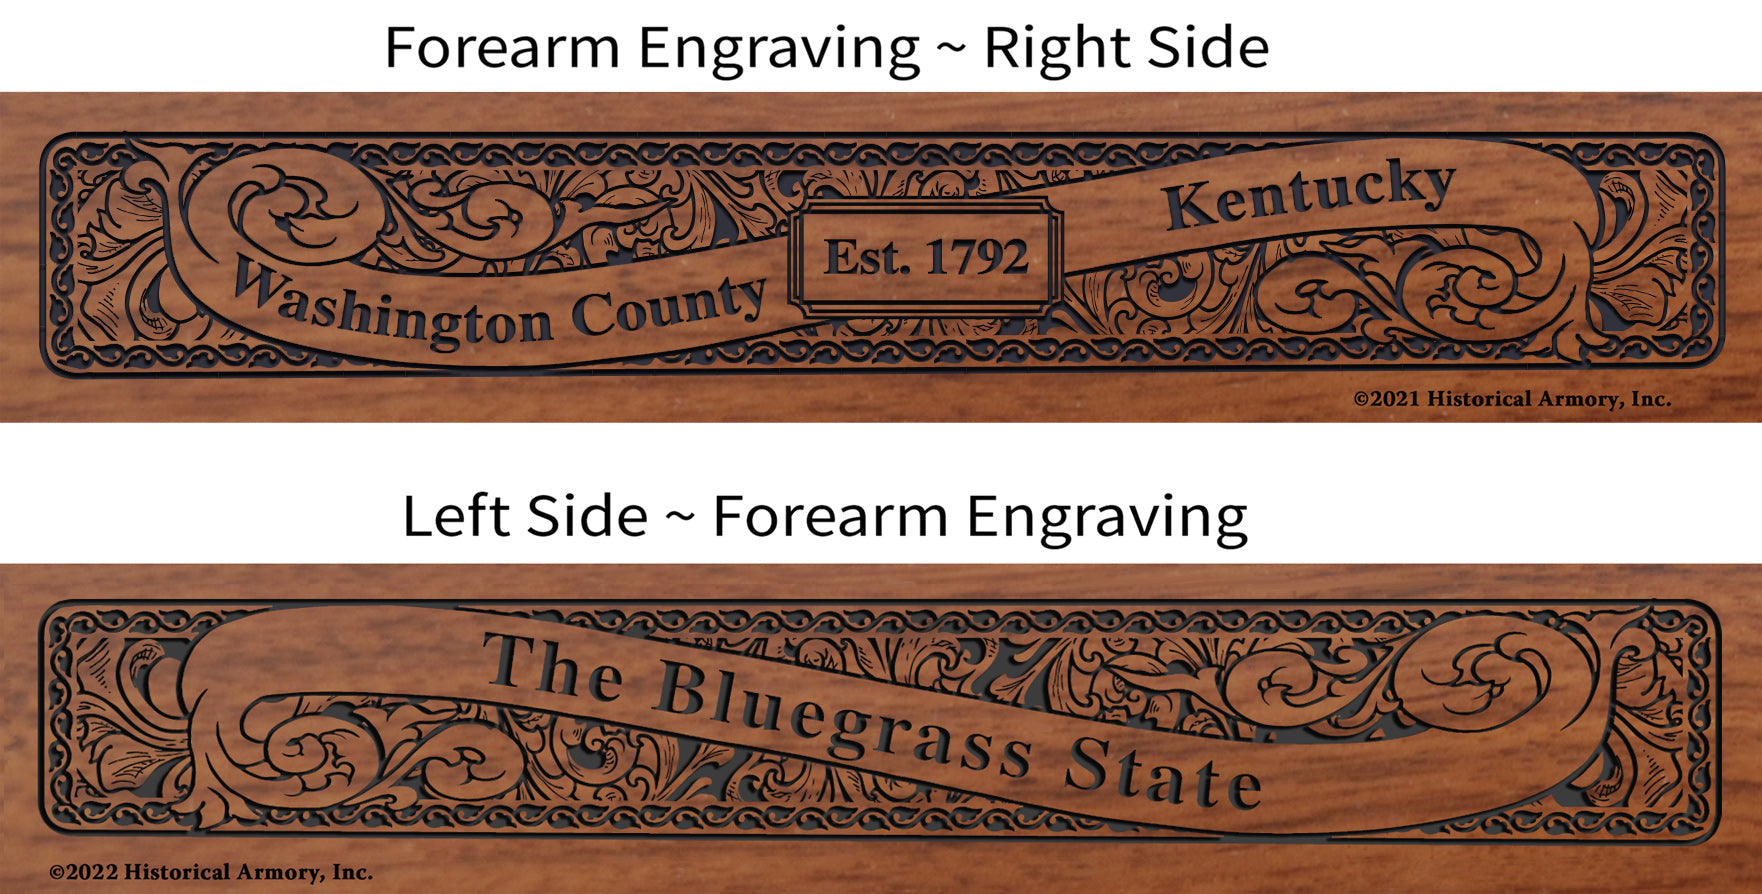 Washington County Kentucky Engraved Rifle Forearm